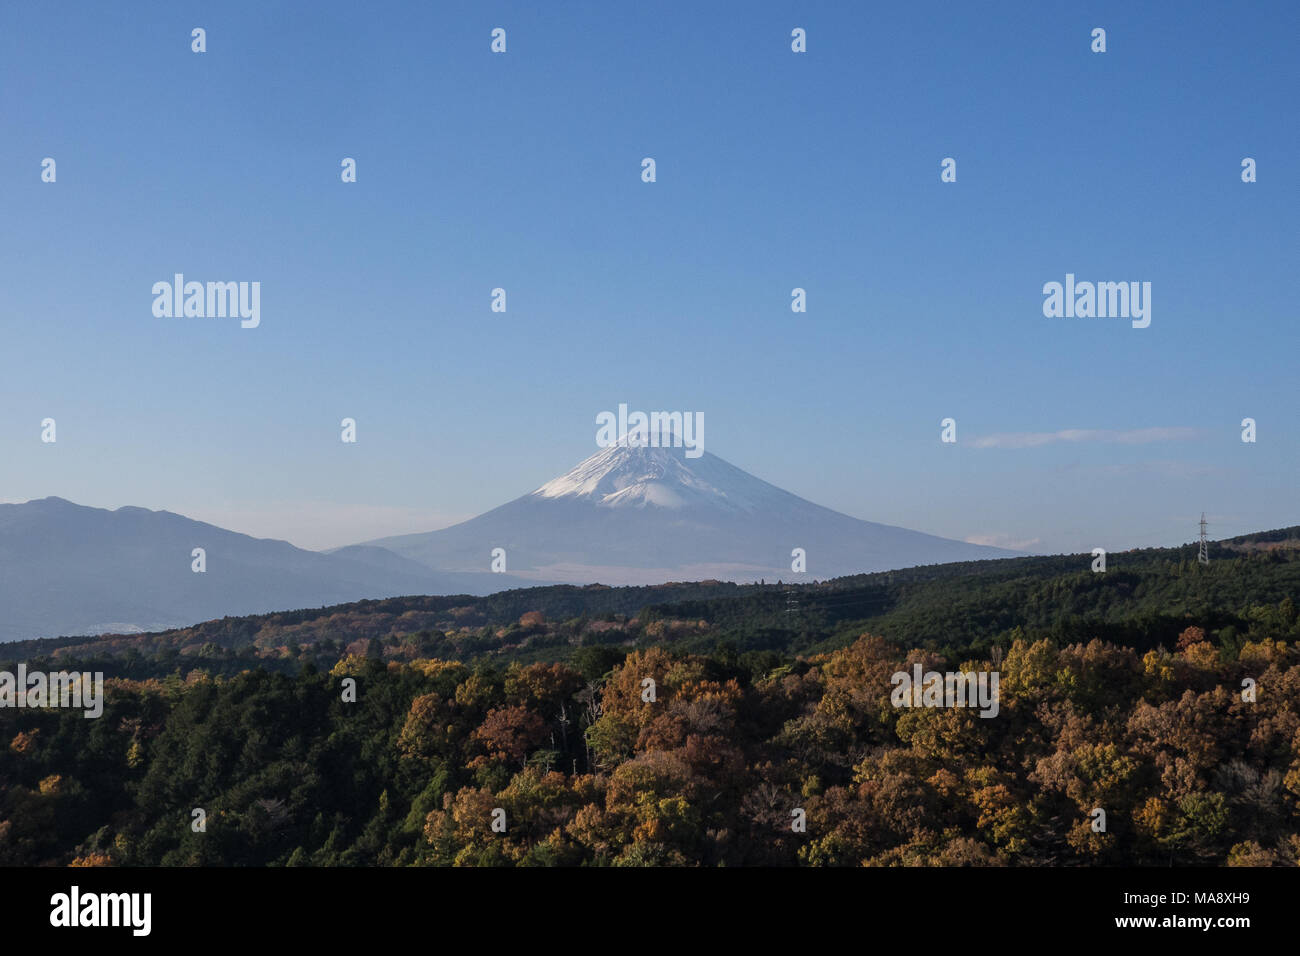 A view of Mount Fuji from the Mishima Skywalk Bridge Stock Photo